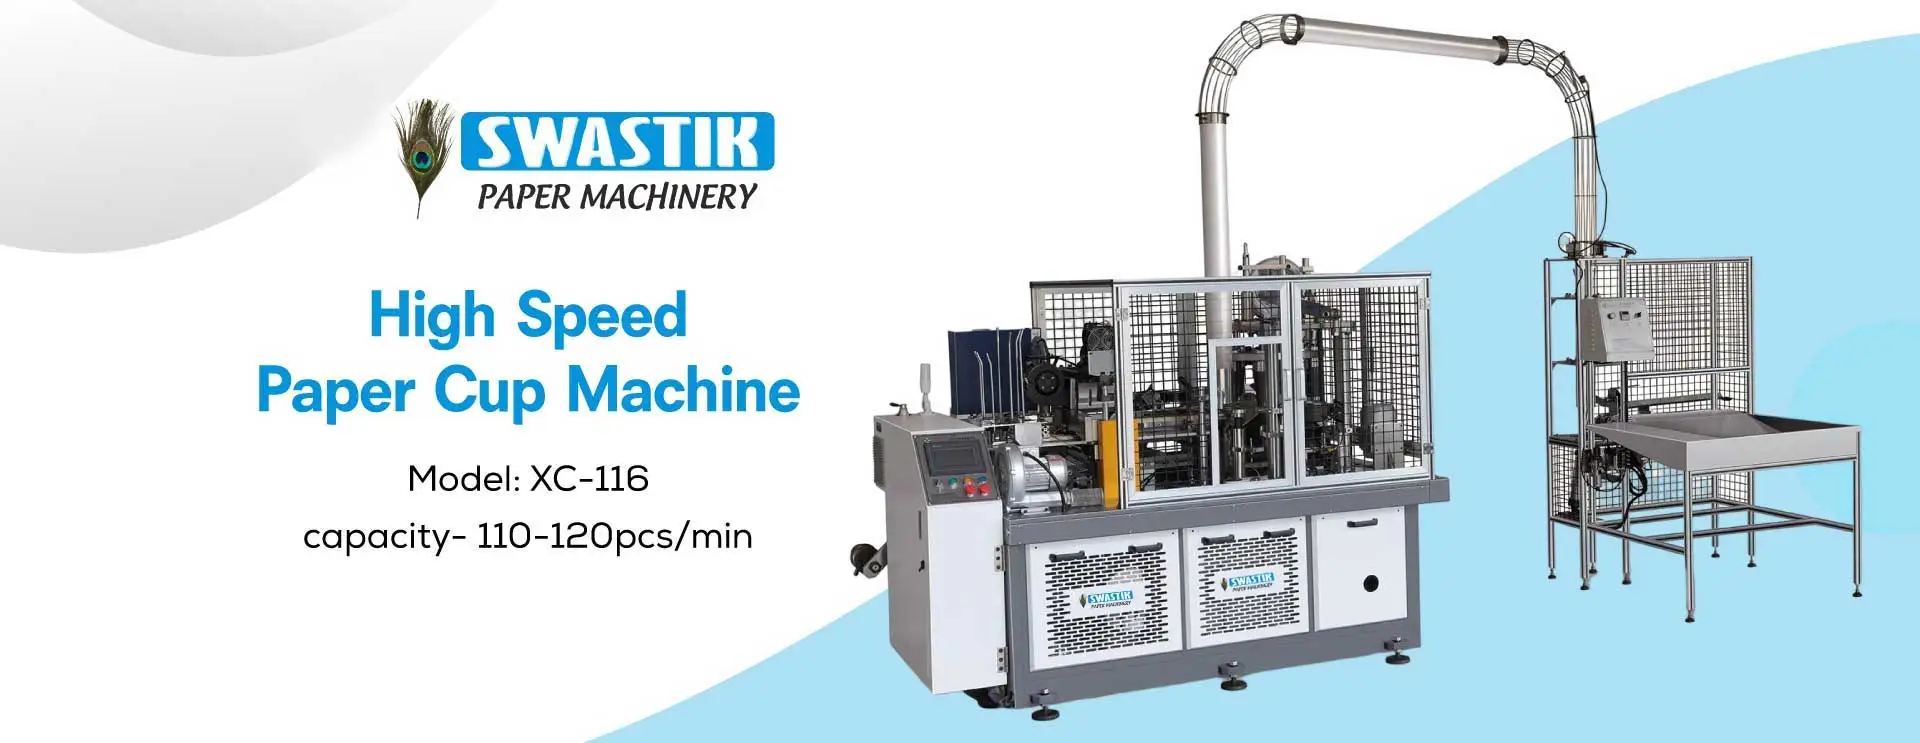 High Speed Paper Cup Machine Manufacturers in Sonipat